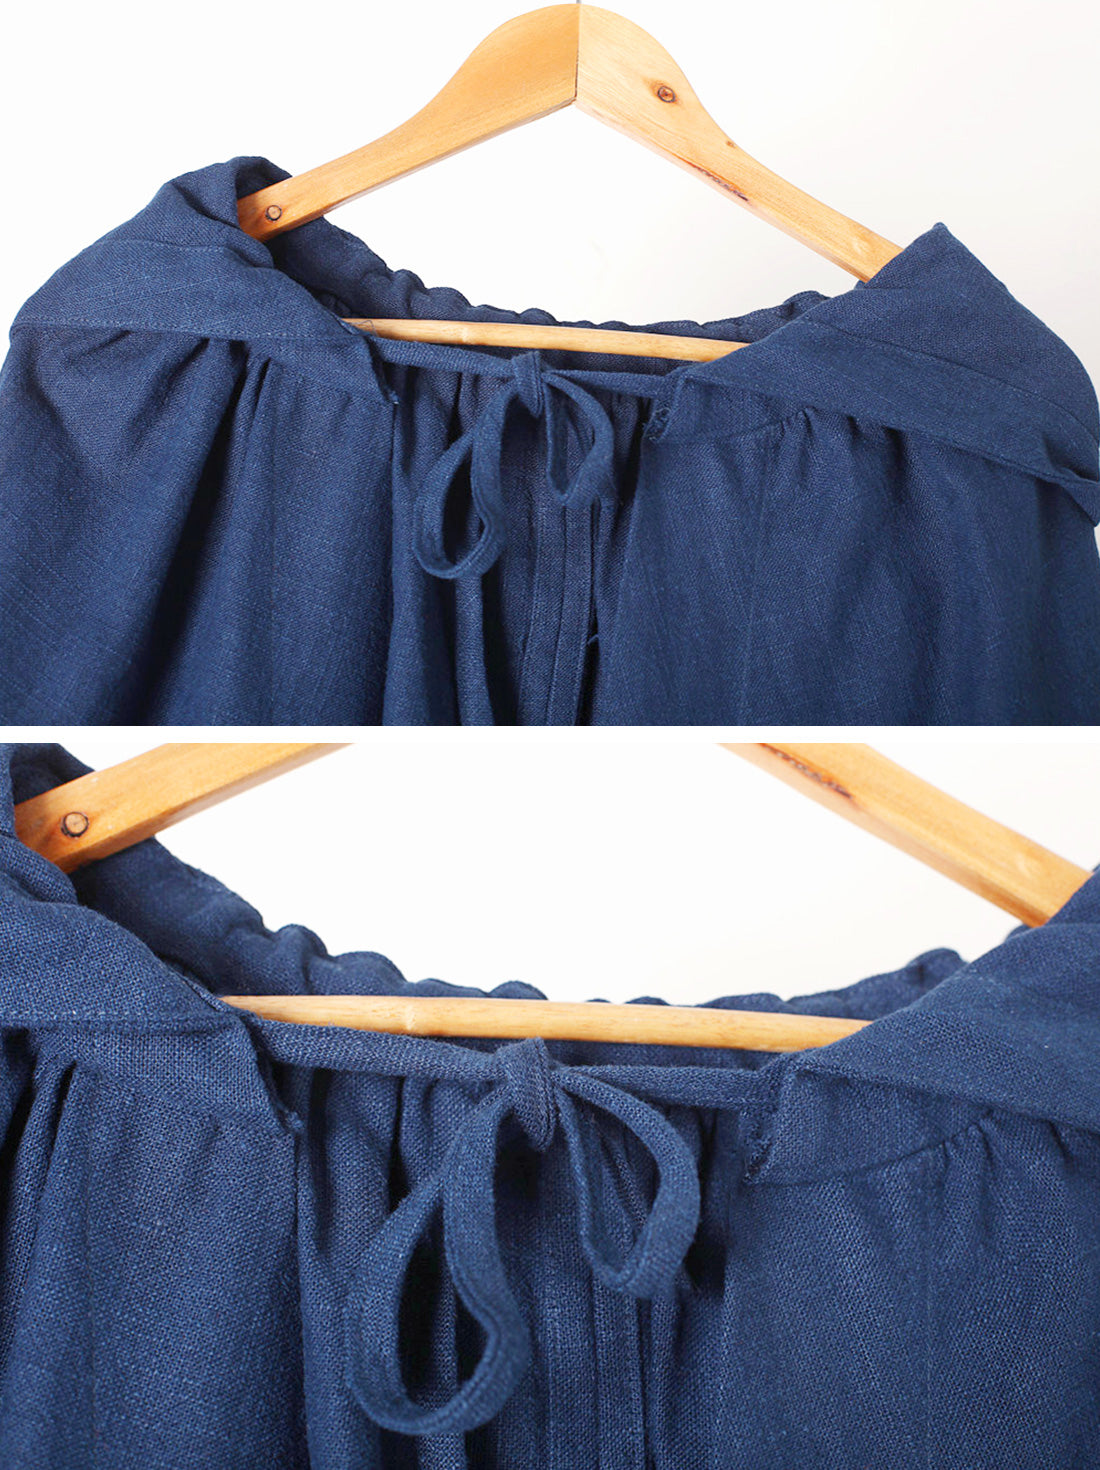 Solid Color Hooded Linen Cape Coat Details 1